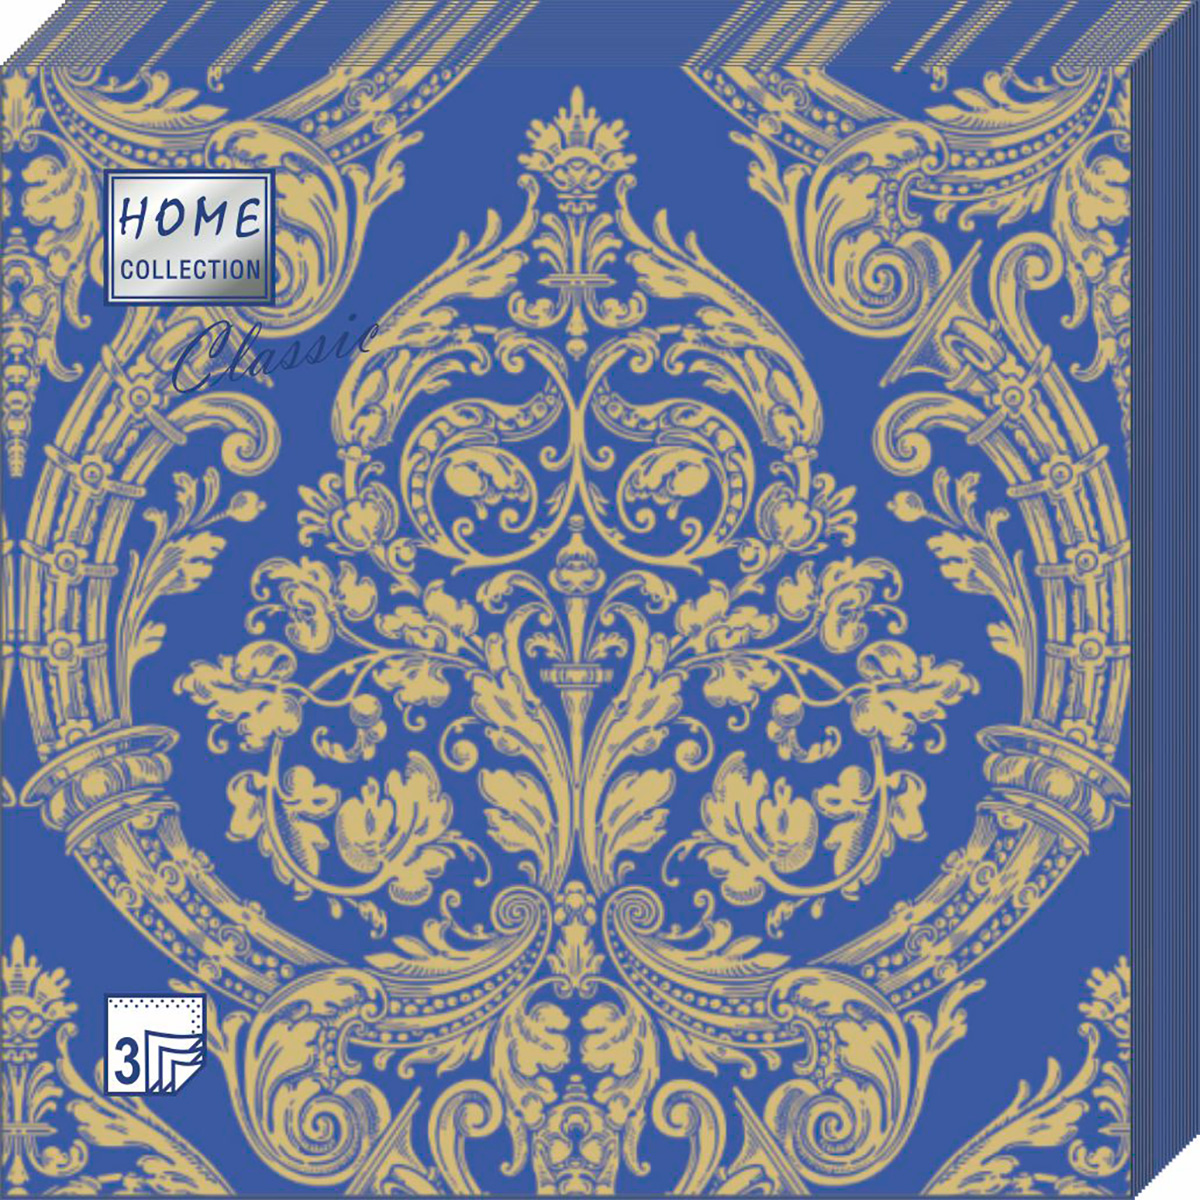 Салфетки Home collect classic бумажные золото  на синем 3сл 20л